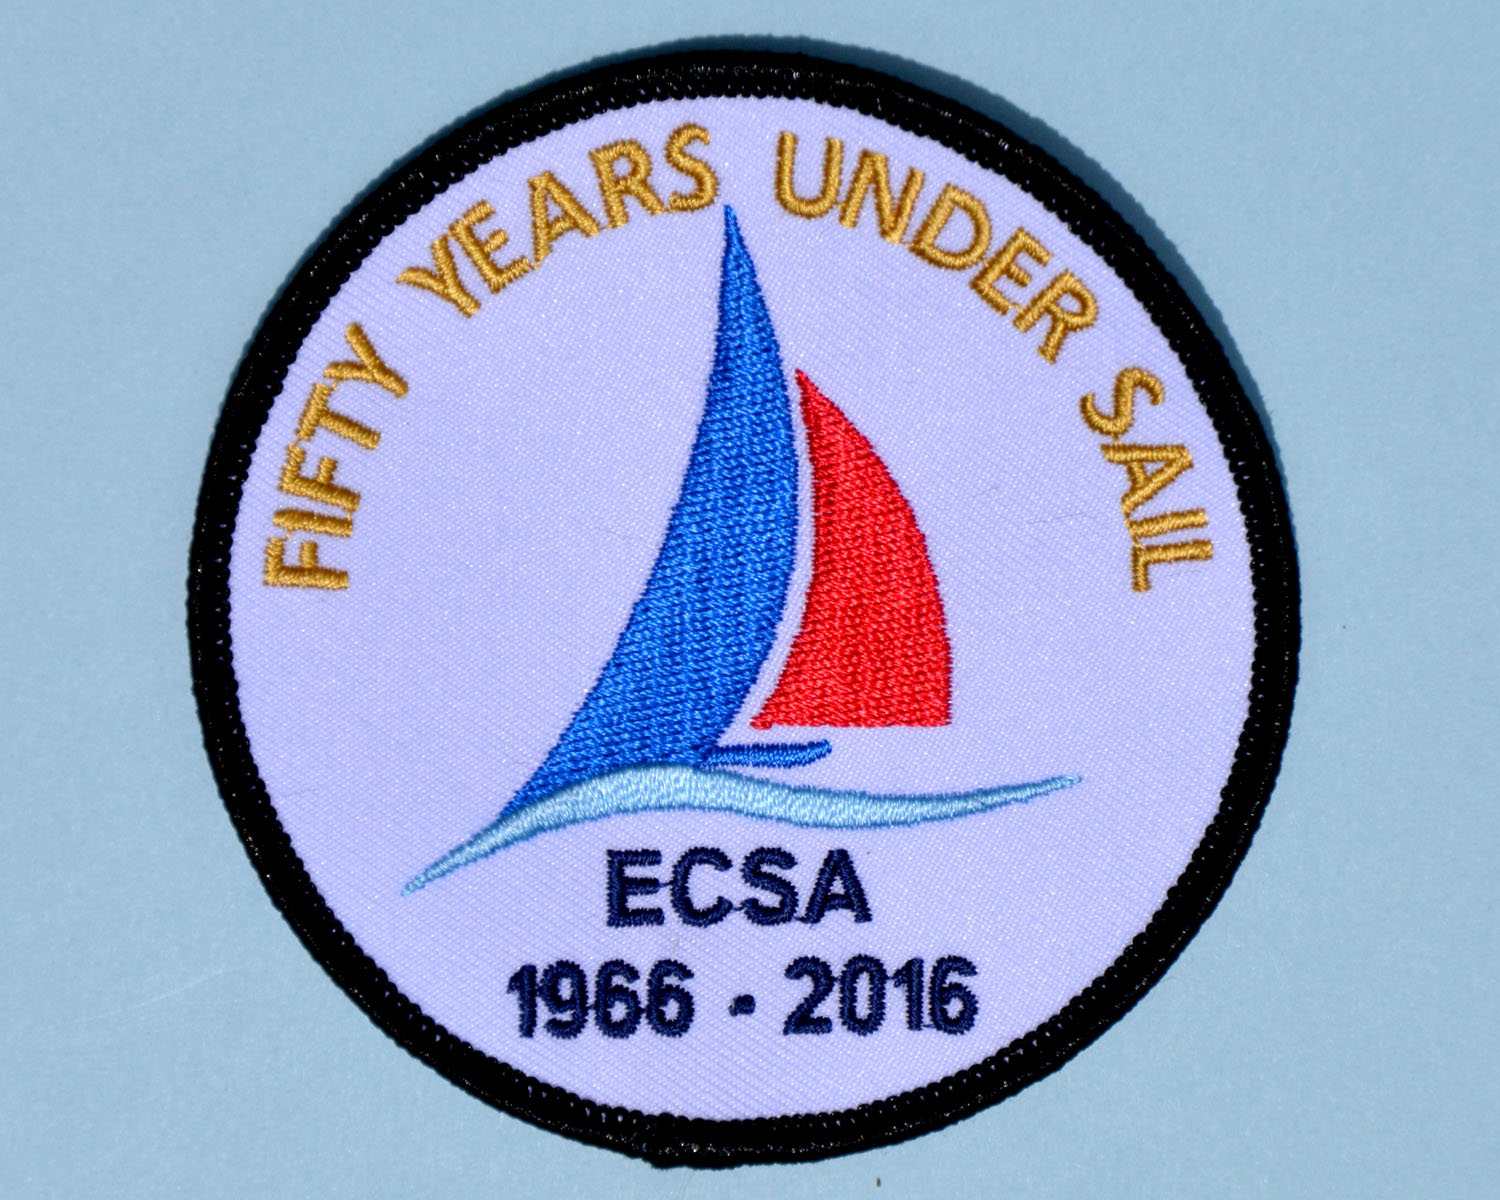 50 Years of Sailing